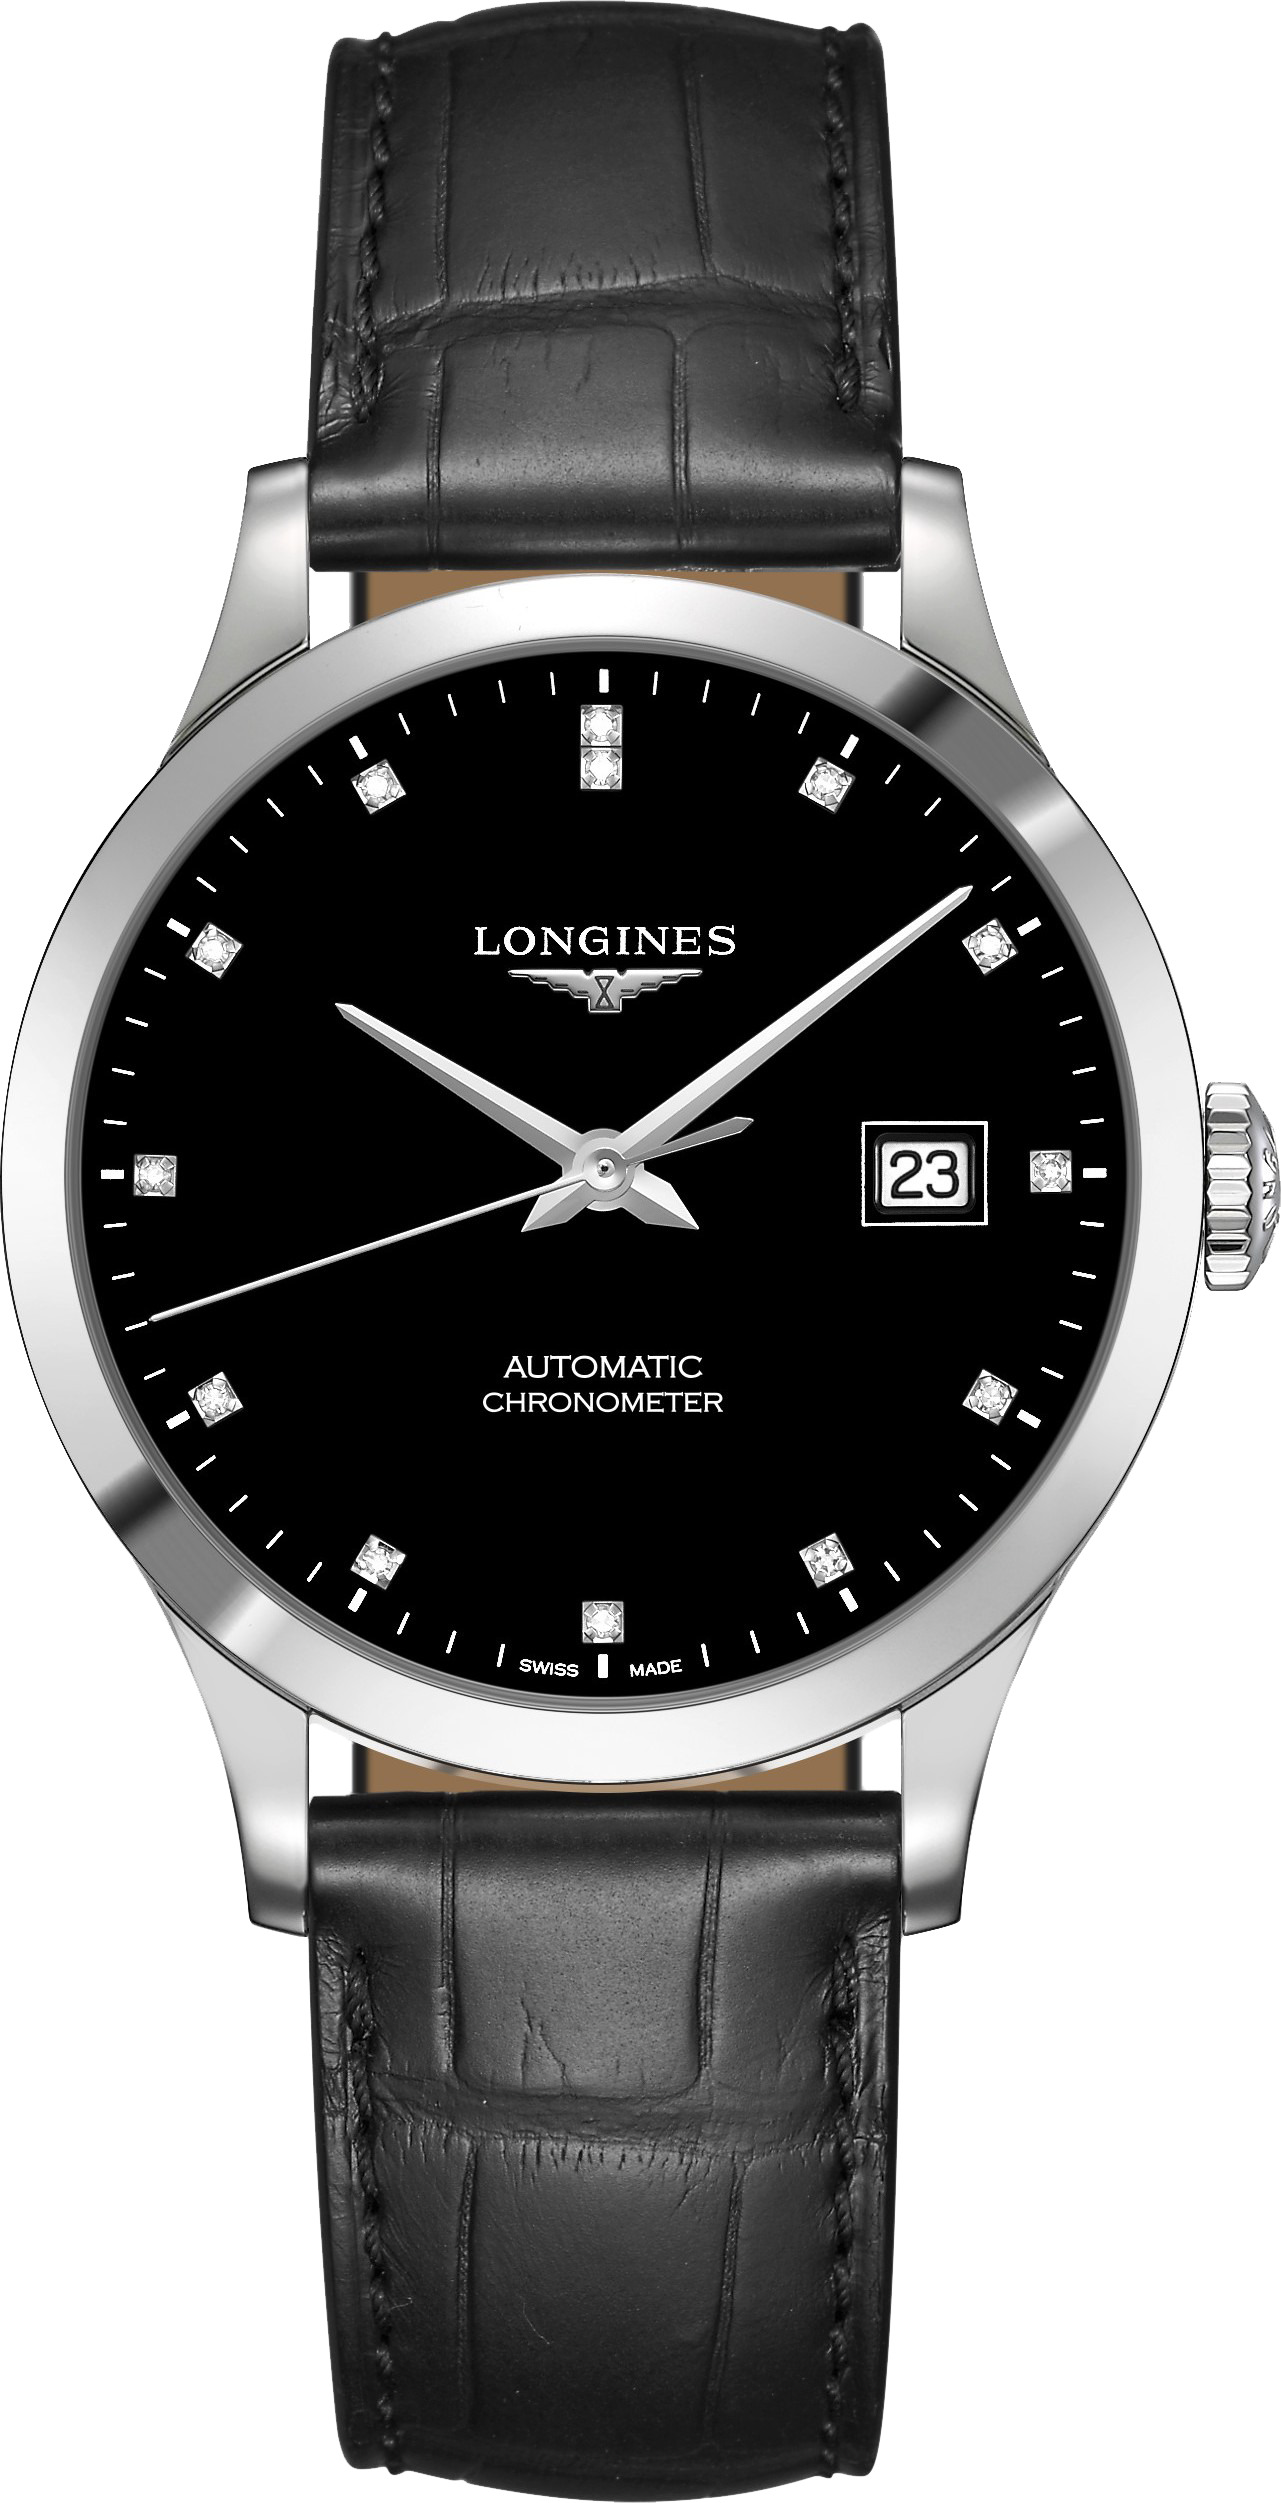 Đồng hồ nữ Longines L2.320.4.57.2